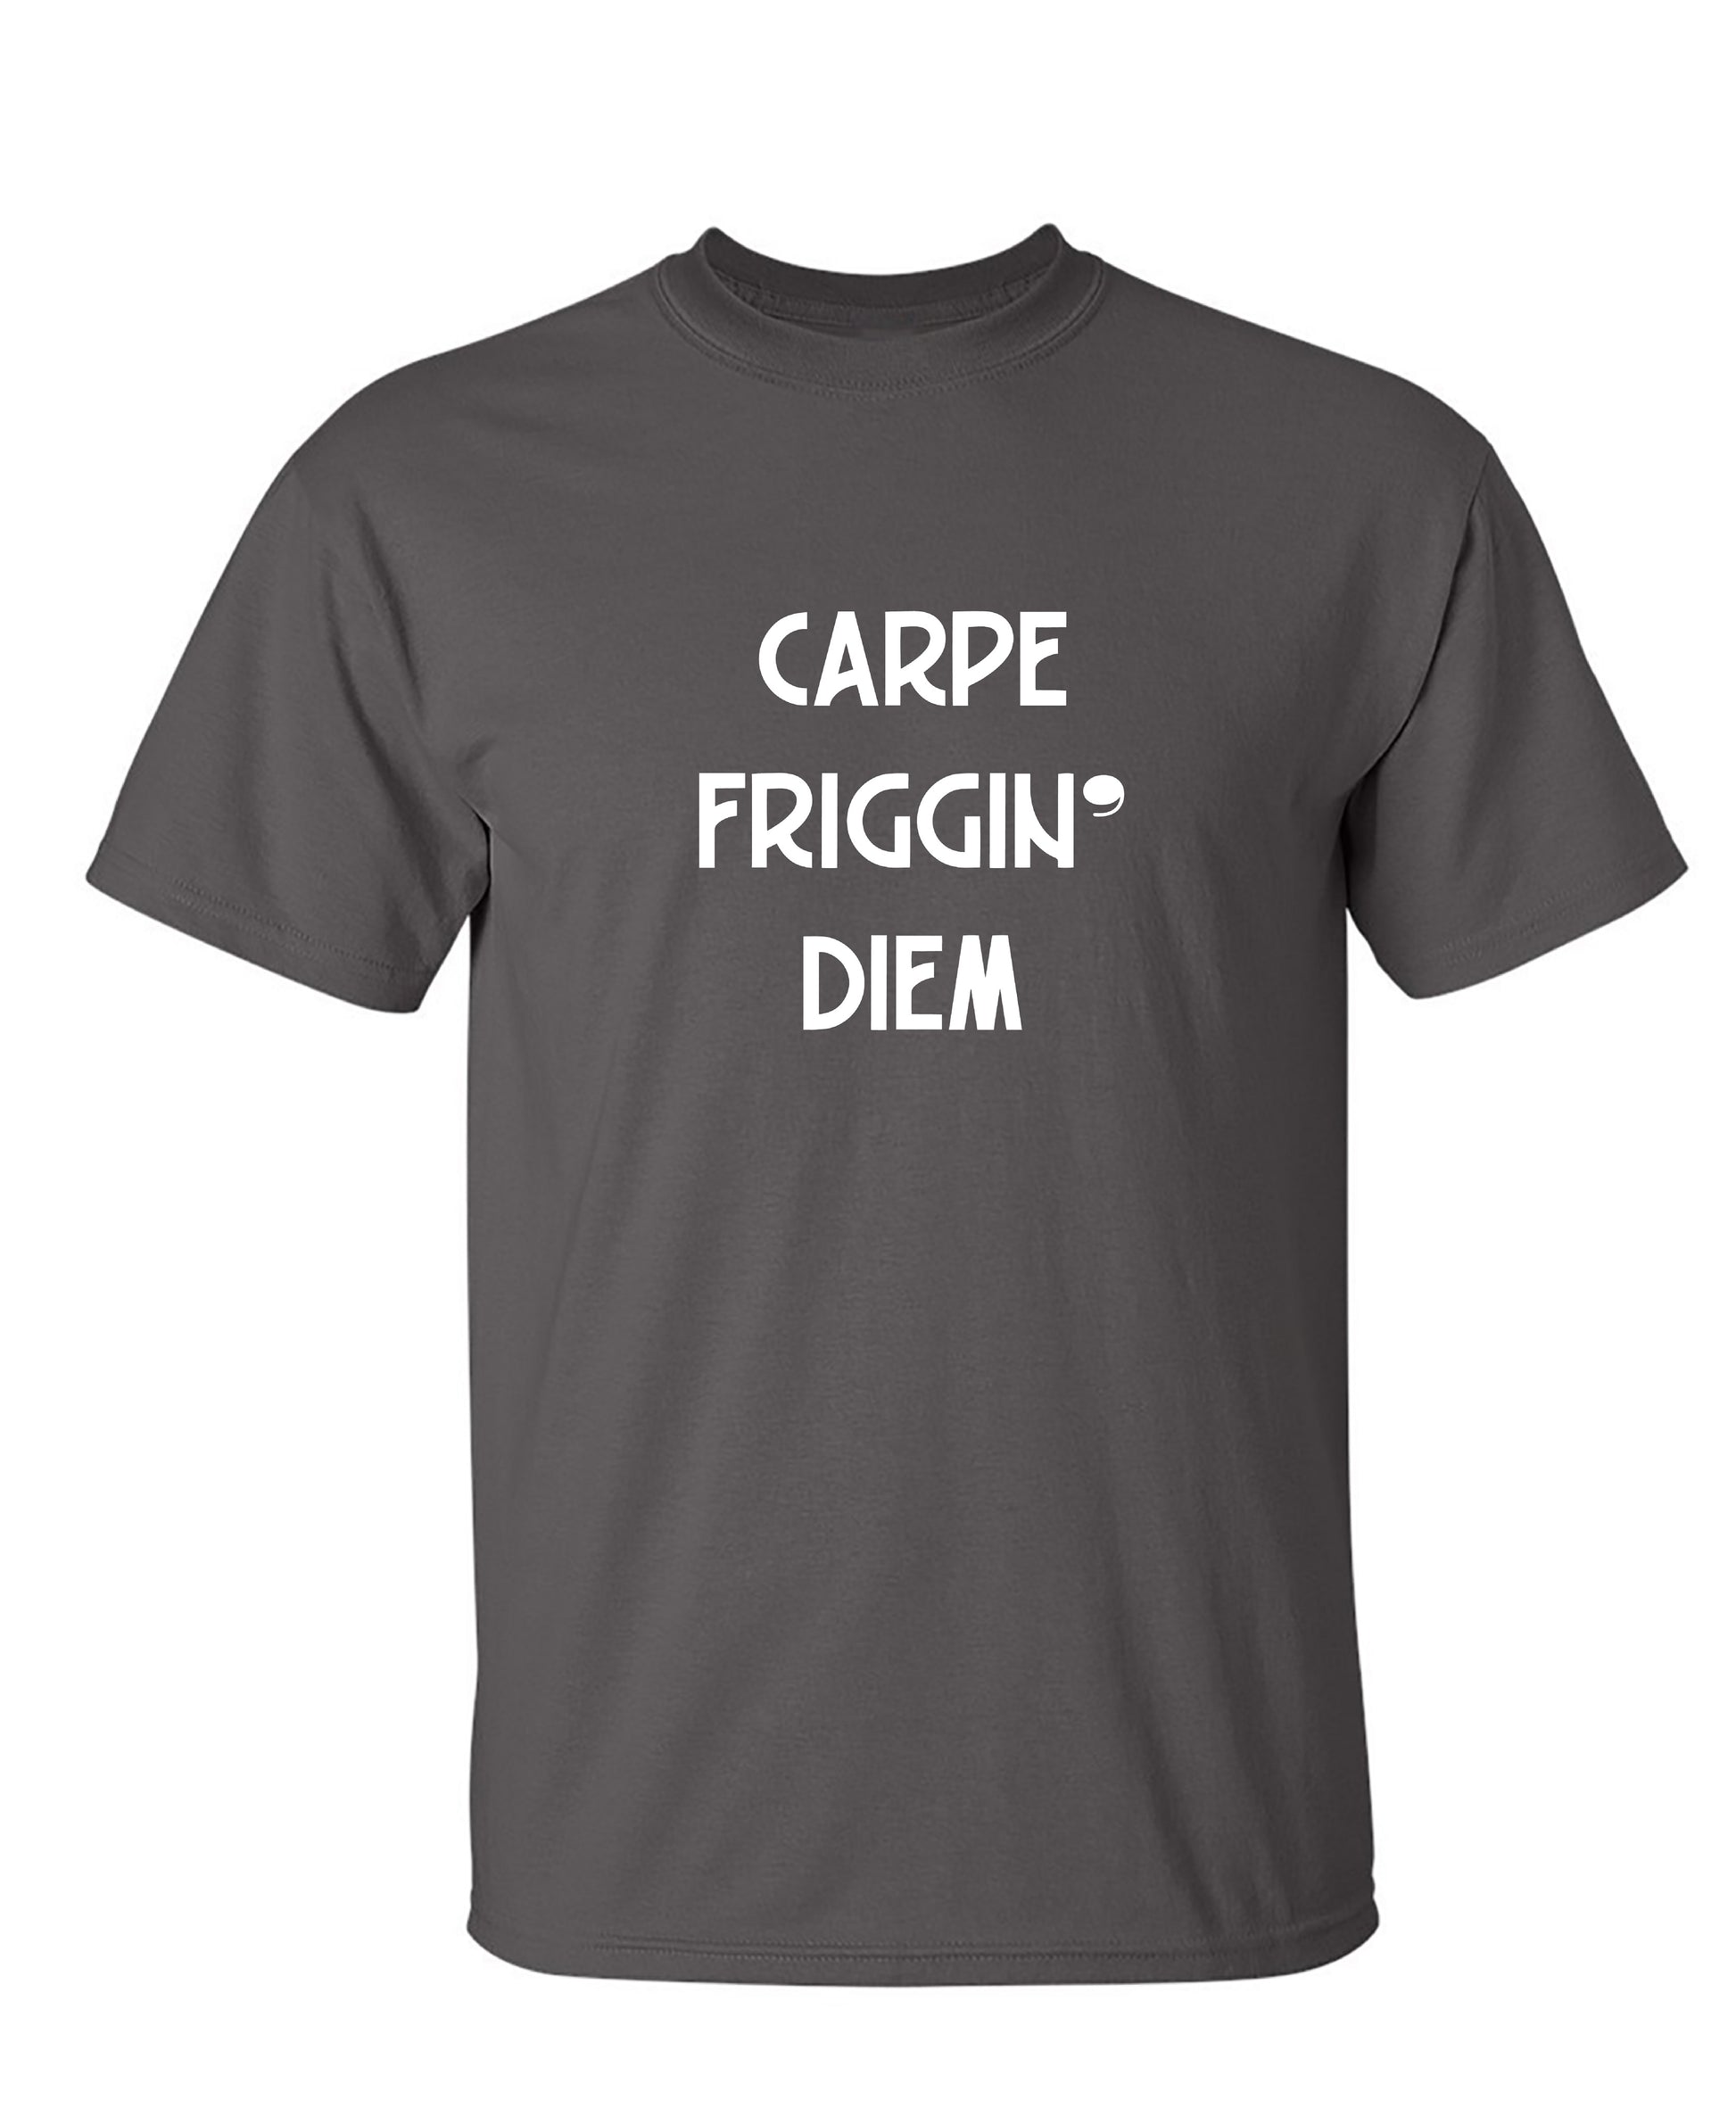 Carpe Friggin' Diem - Funny T Shirts & Graphic Tees